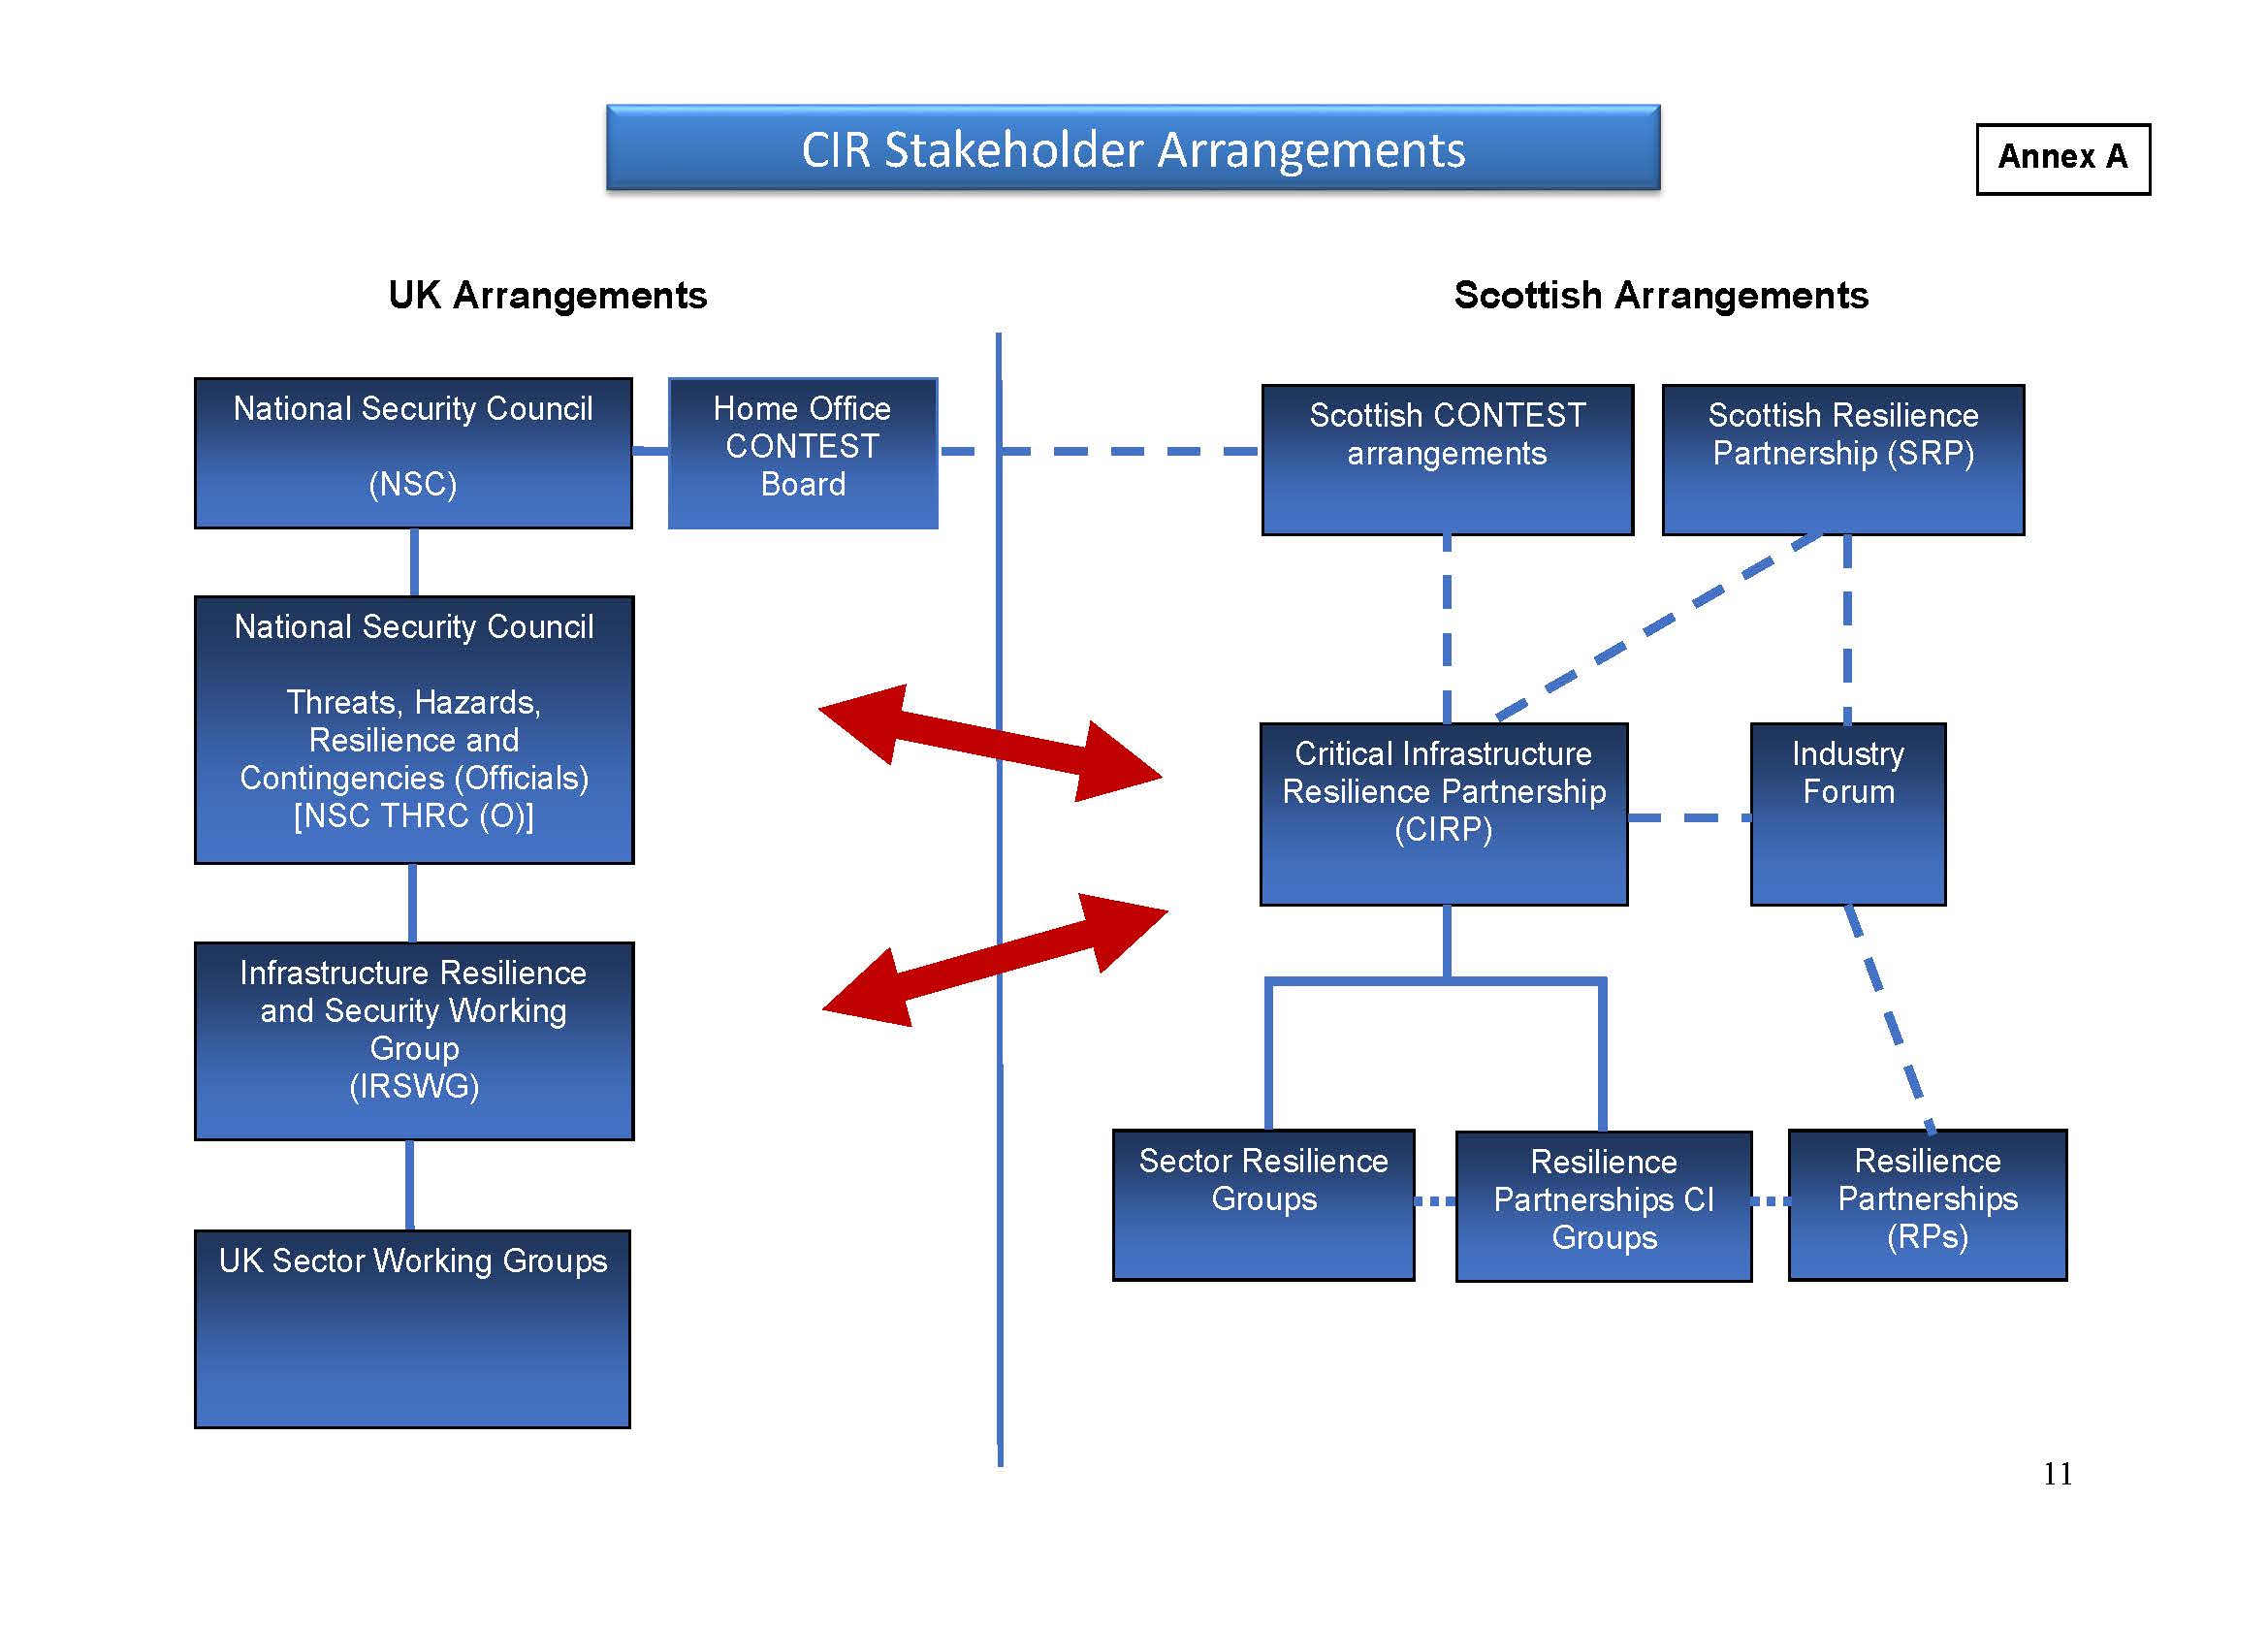 CIR Stakeholder arrangements